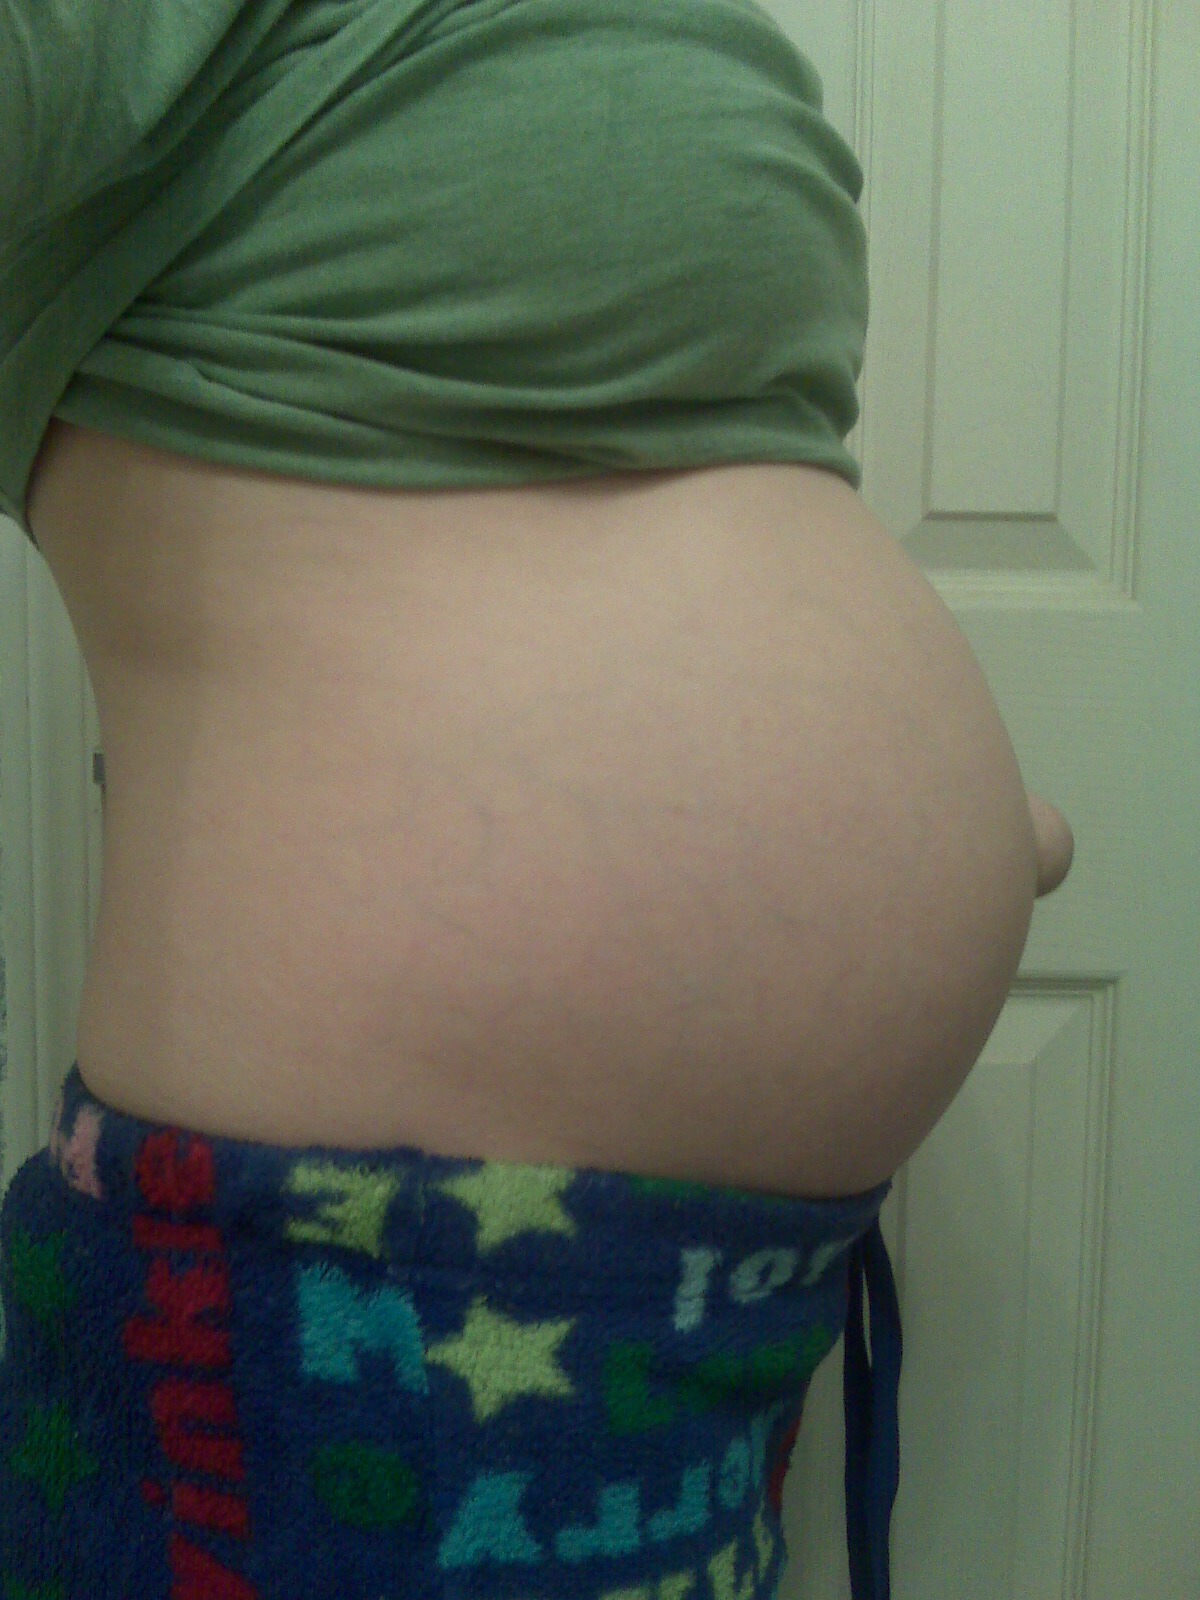 23 недели живот форум. Живот на 23 неделе беременности. Живот на 21-22 неделе. Животик на 22 неделе беременности.